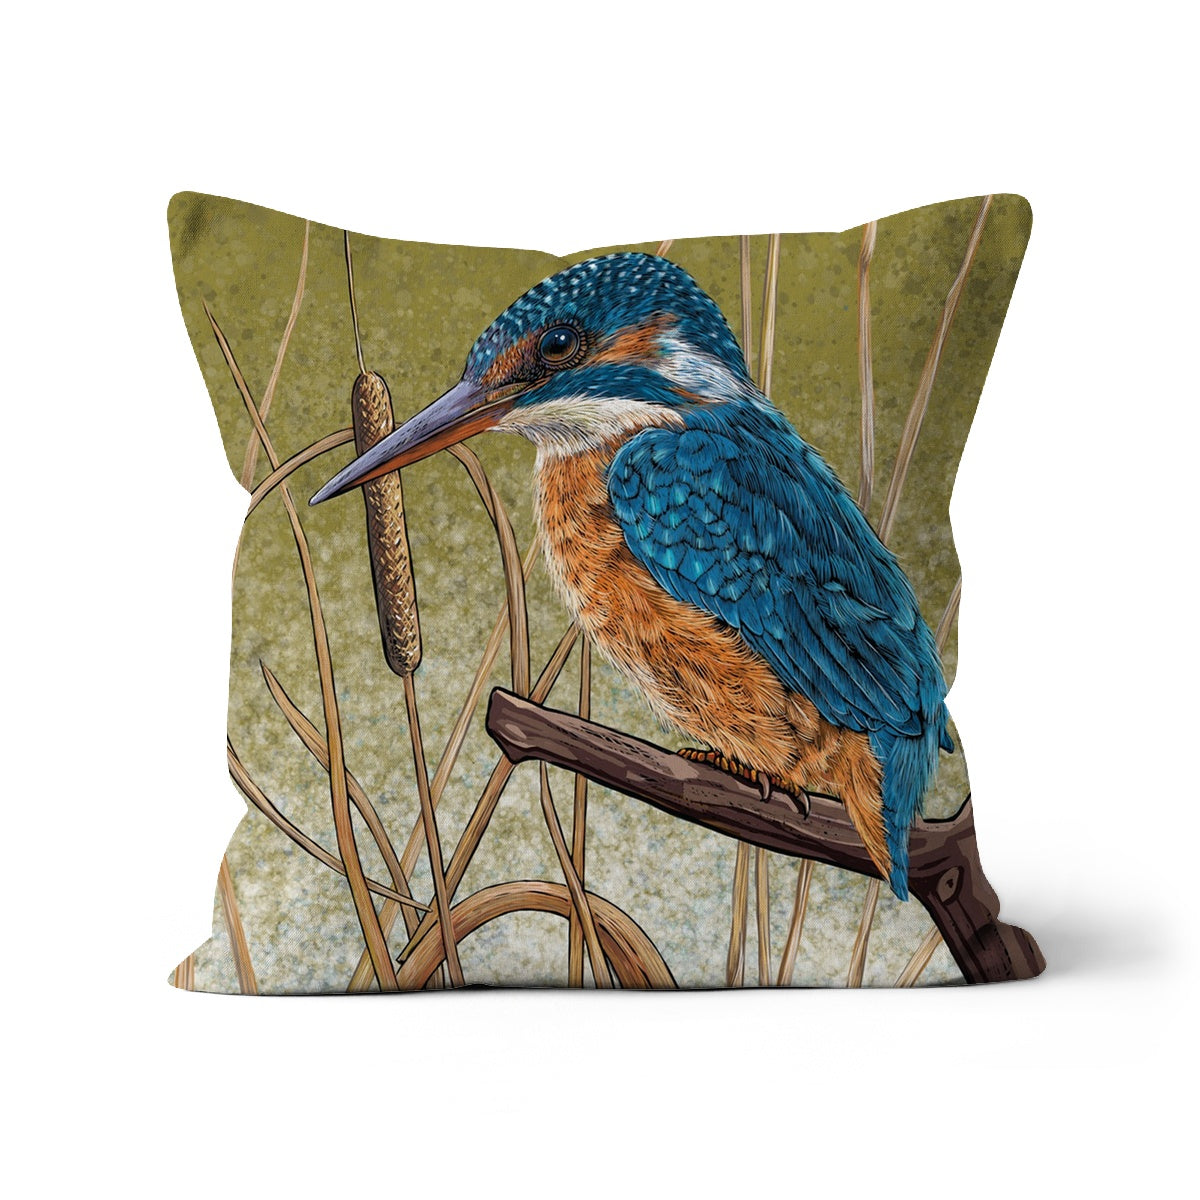 Kingfisher cushion by Fox and Boo